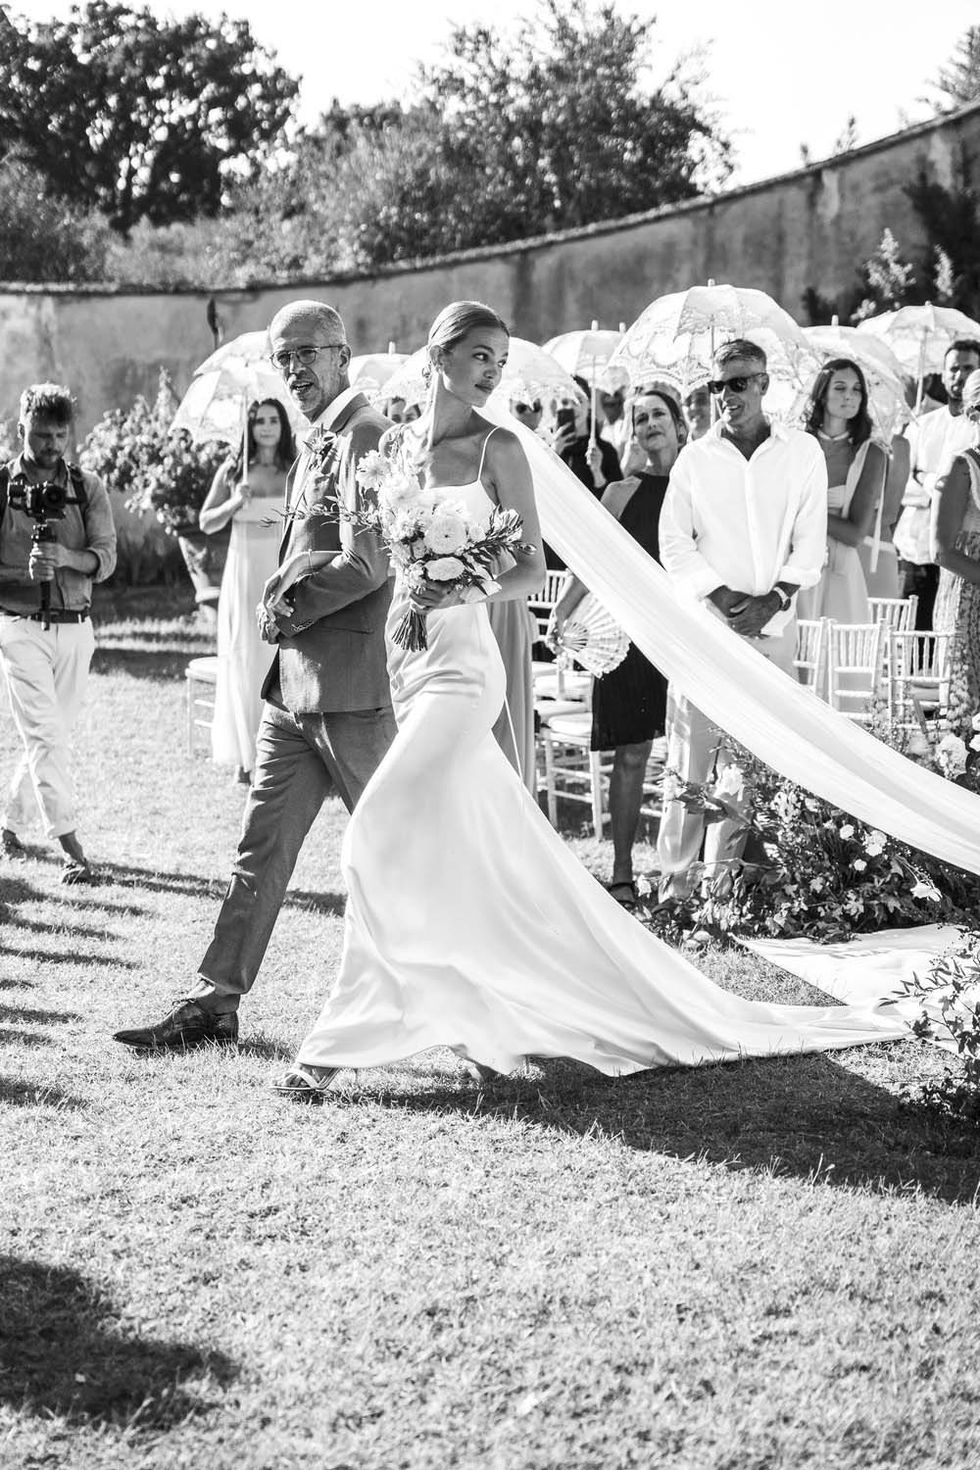 daphne groeneveld wedding dress